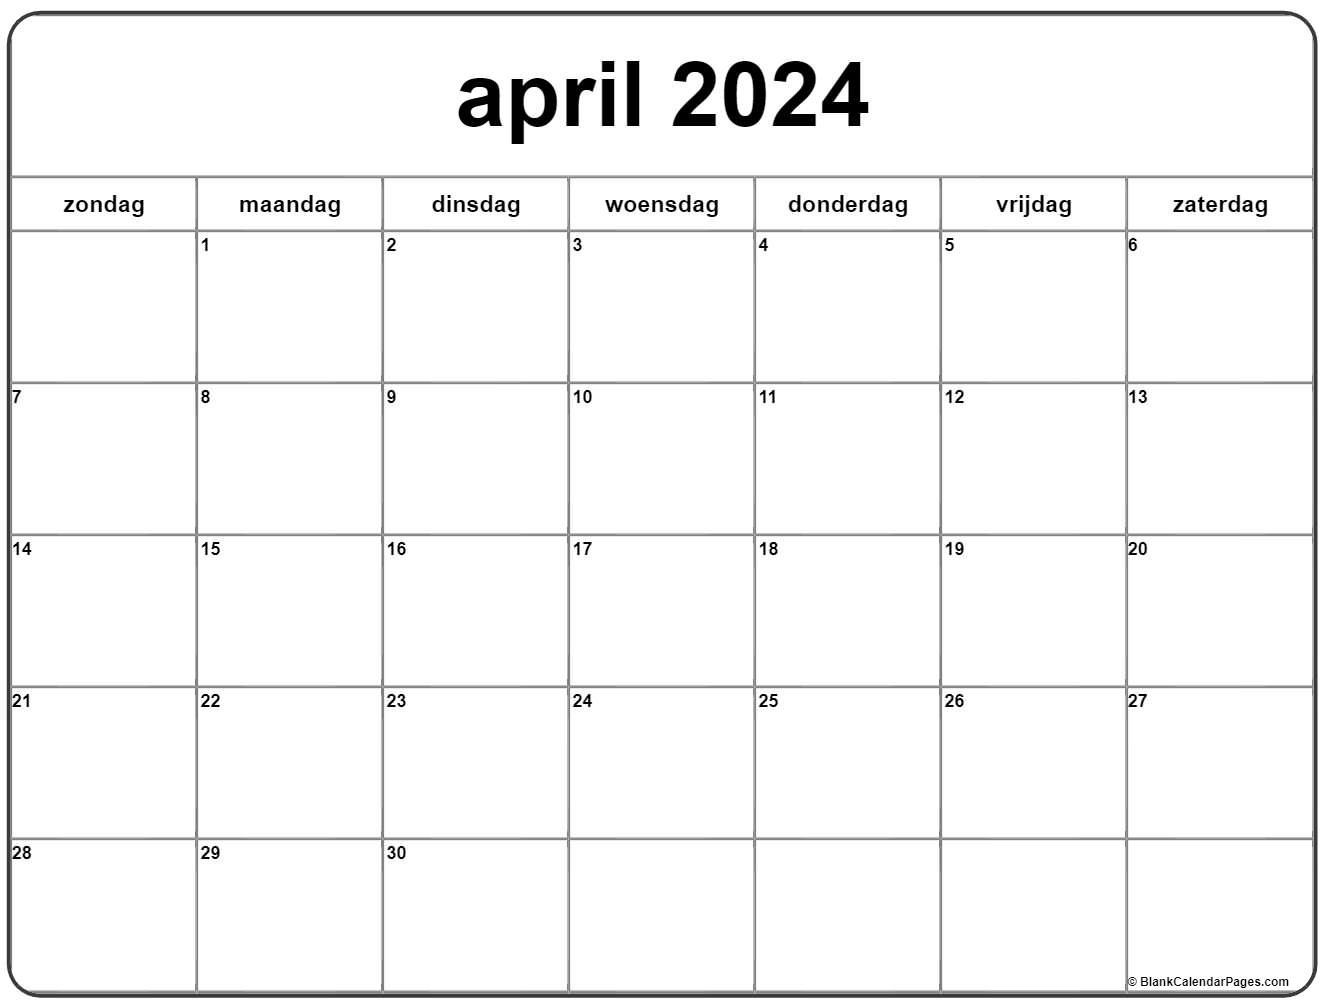 April 2023 Kalender Nl1 